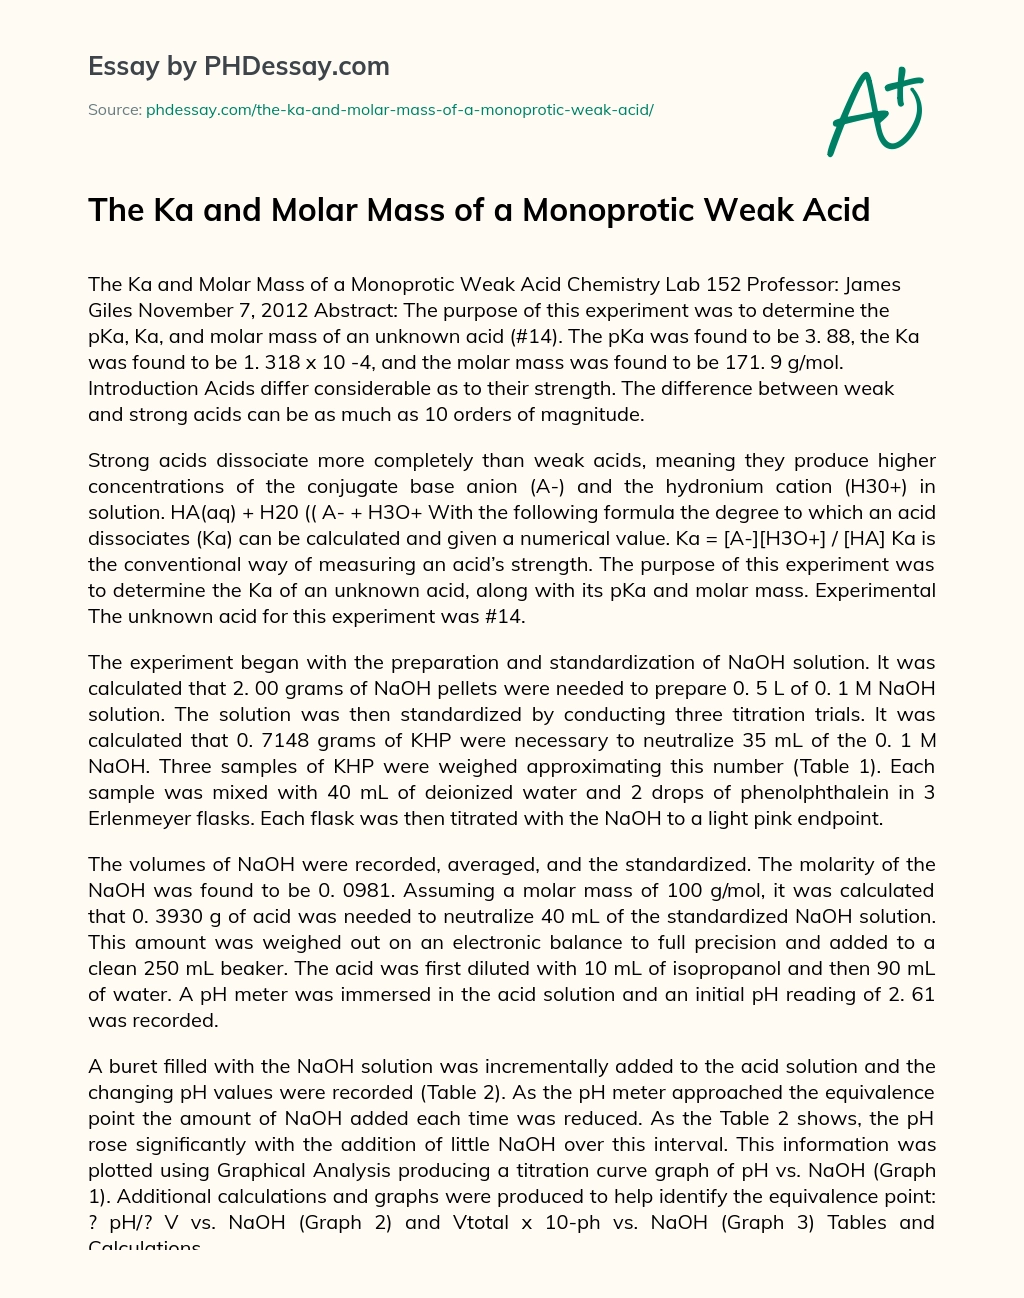 The Ka and Molar Mass of a Monoprotic Weak Acid essay